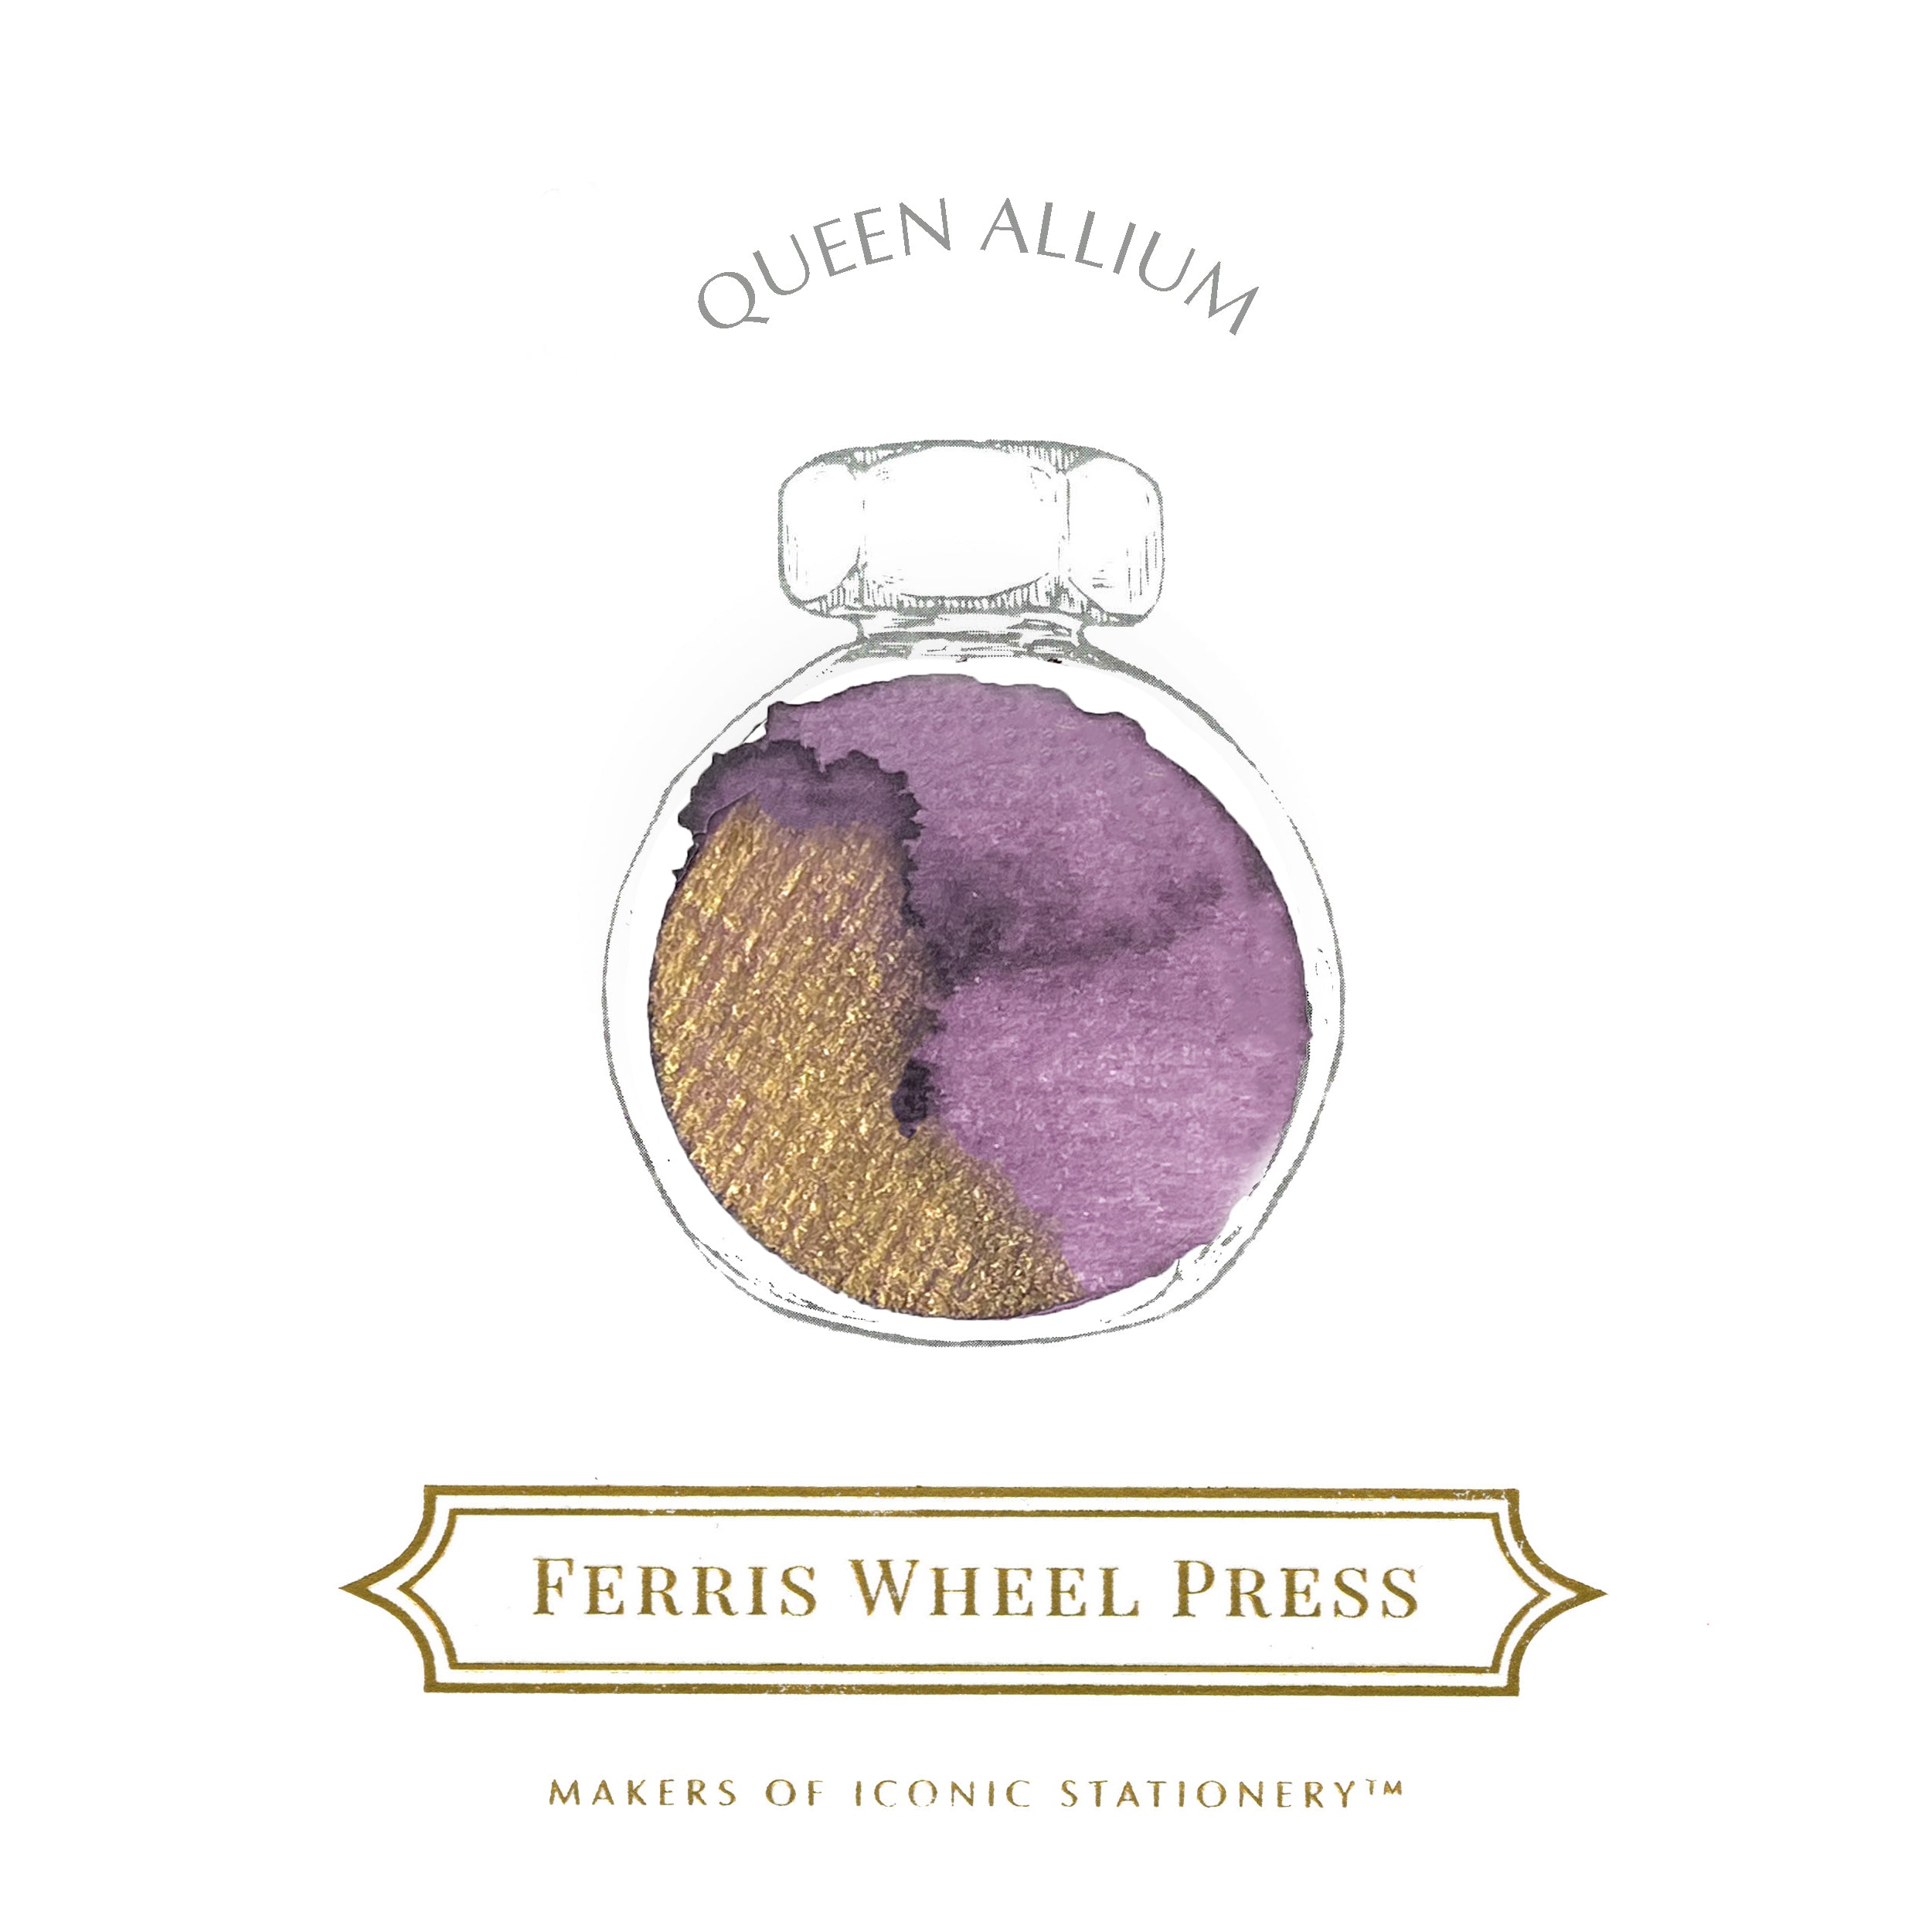 Ferris Wheel Press Ink Charger Set The Original Trio